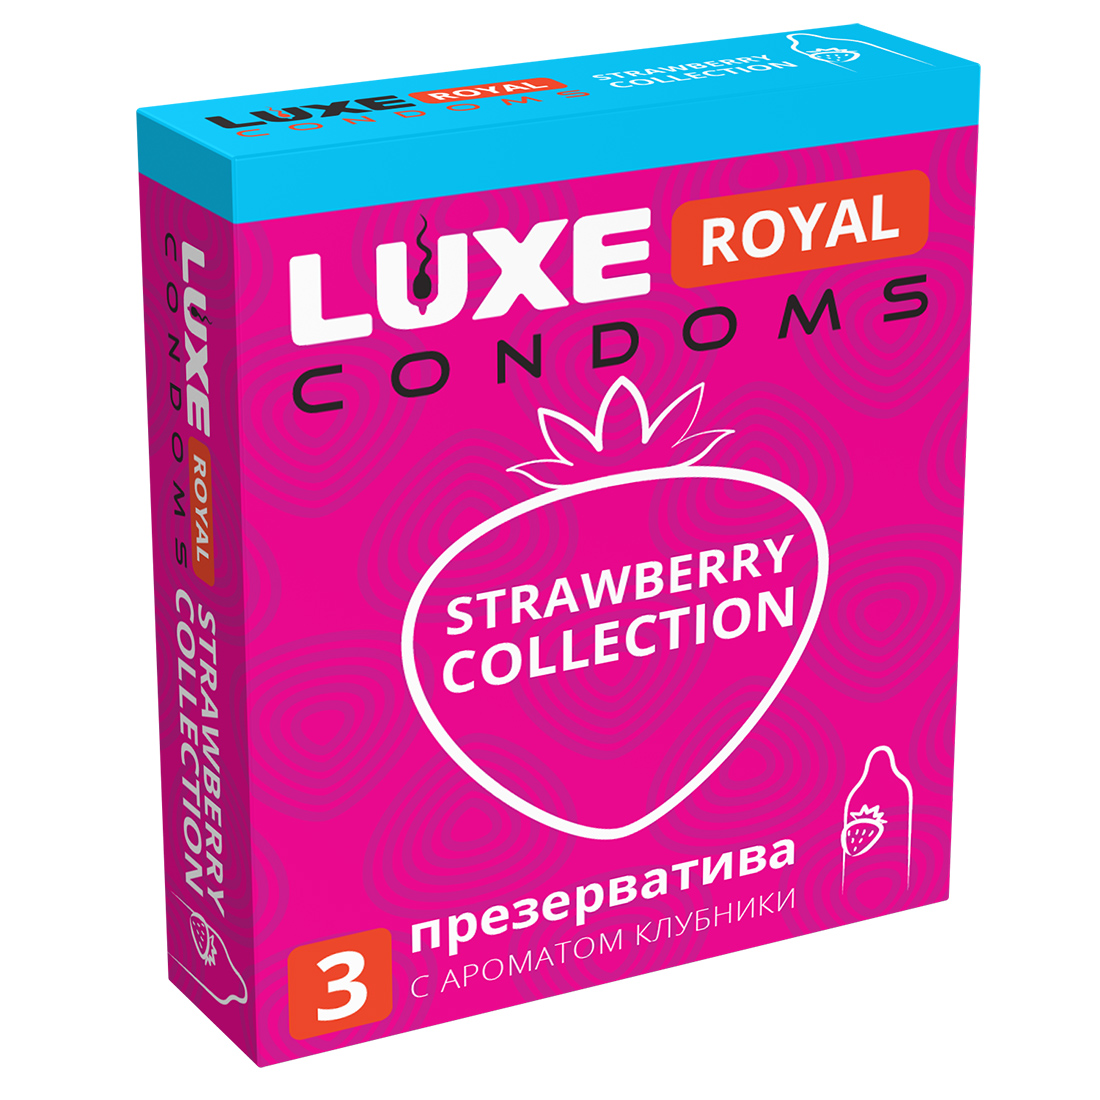 Презервативы LUXE ROYAL STRAWBERRY COLLECTION гладкие с ароматом клубники, 3 шт